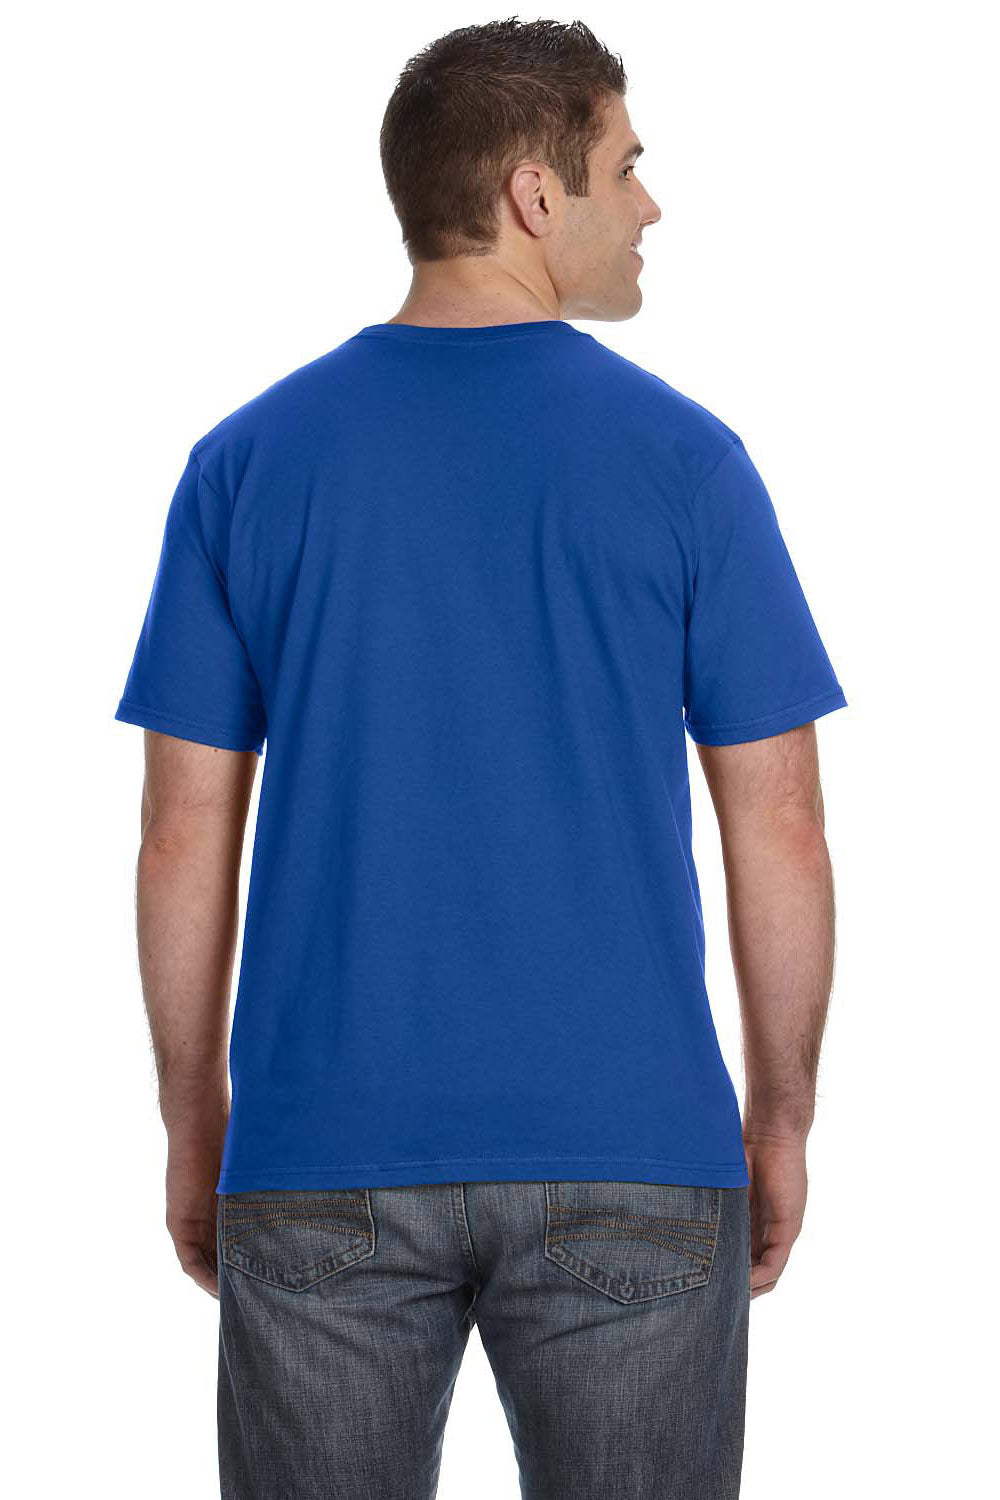 Anvil 980 Mens Short Sleeve Crewneck T-Shirt Royal Blue Back